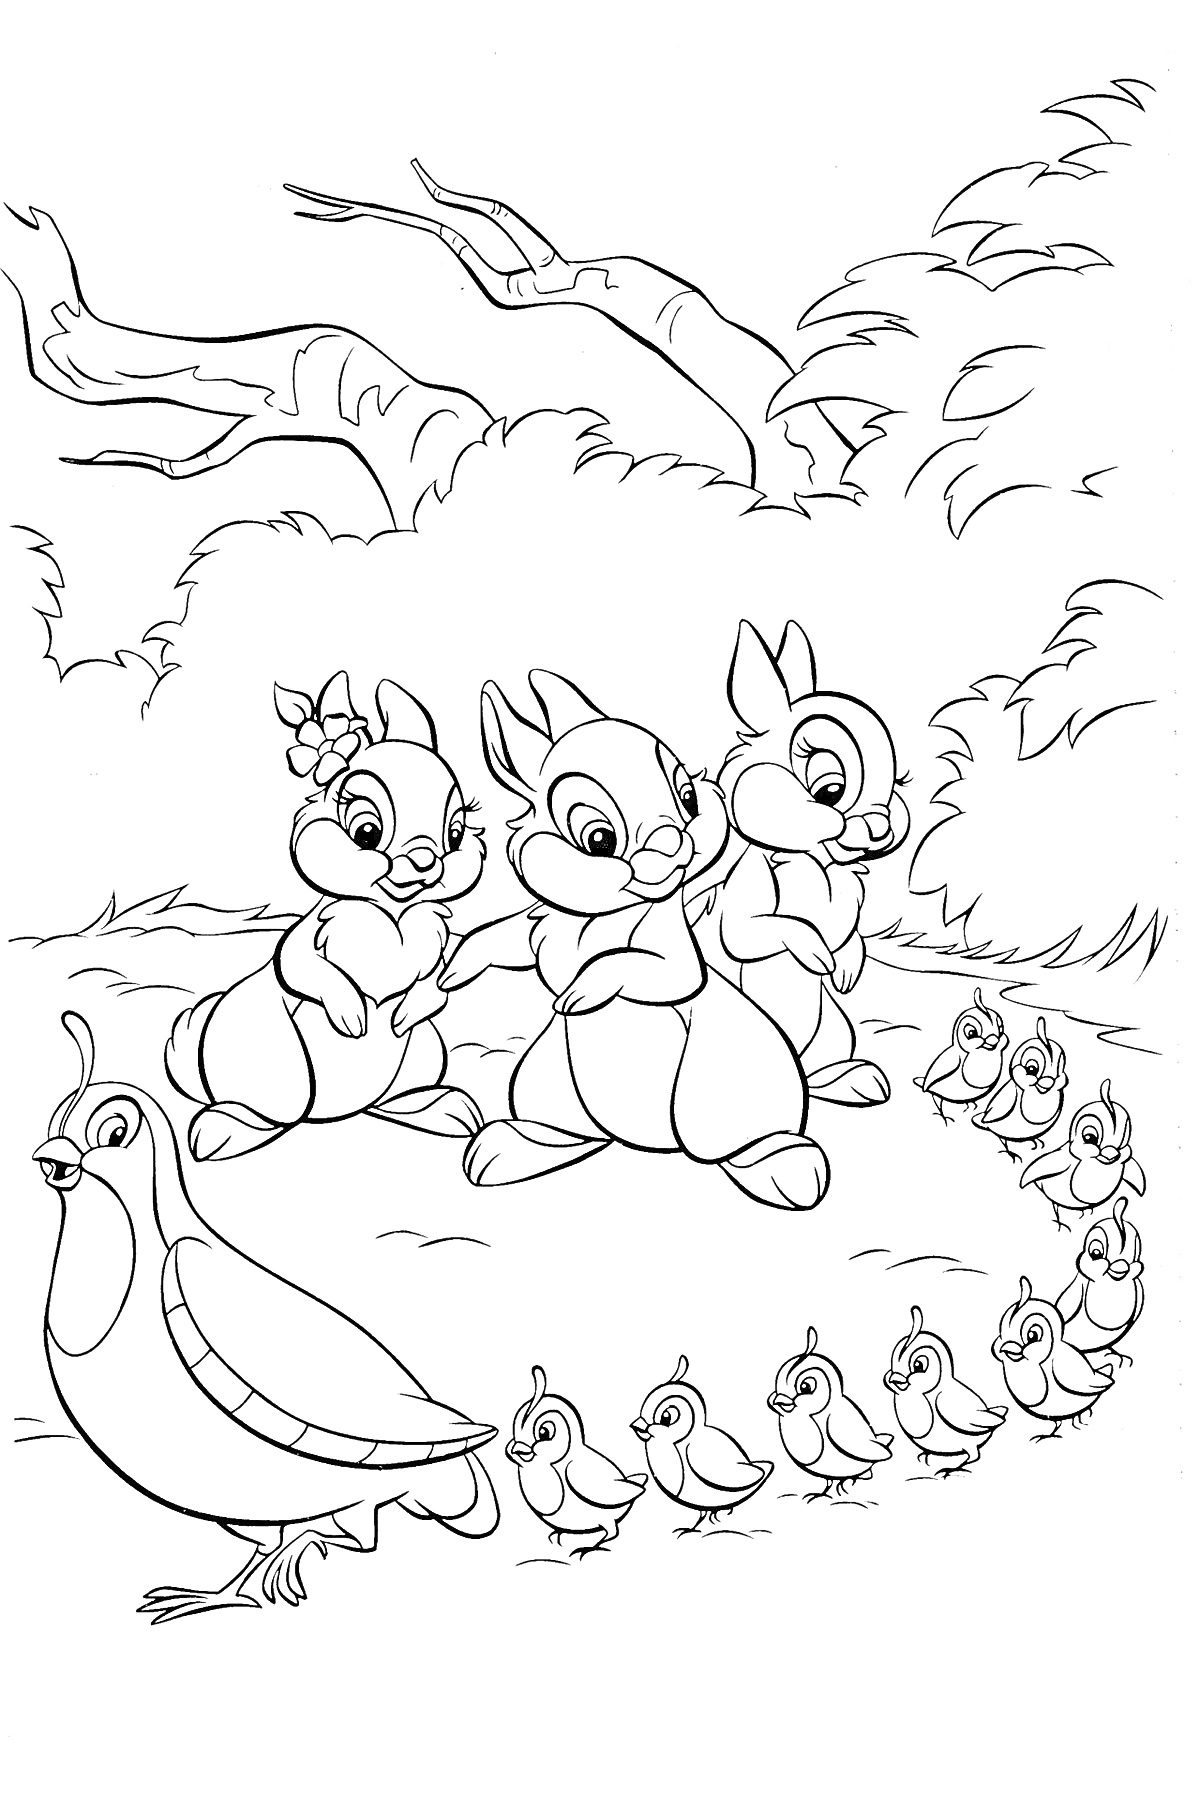 Раскраска Три крольчонка на поляне рядом с птицей и шествием птенцов, на фоне леса